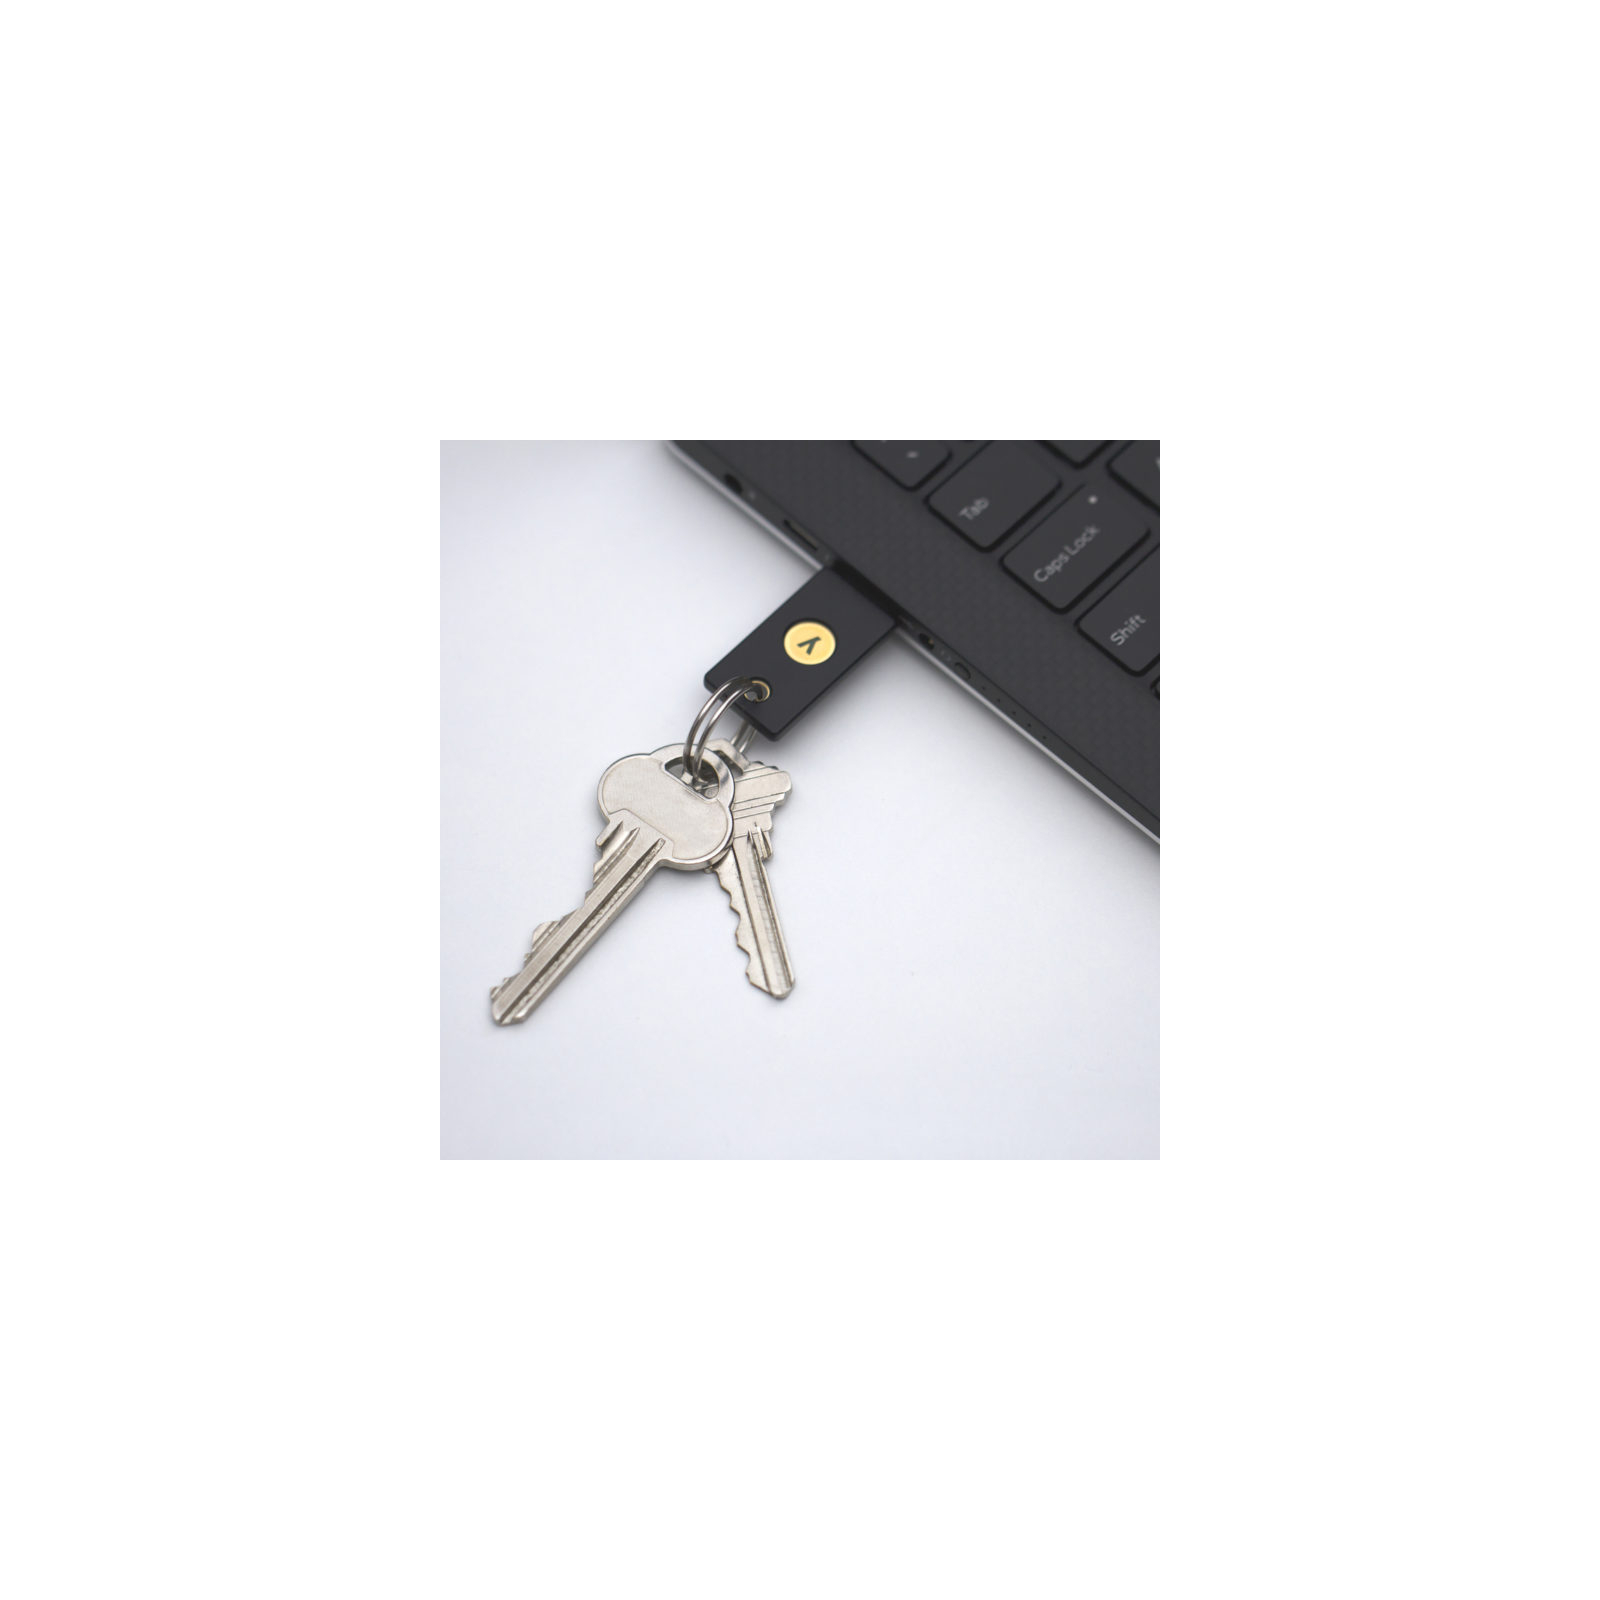 Апаратний ключ безпеки Yubico YubiKey 5 NFC FIPS (YubiKey_5_NFC_FIPS) зображення 2